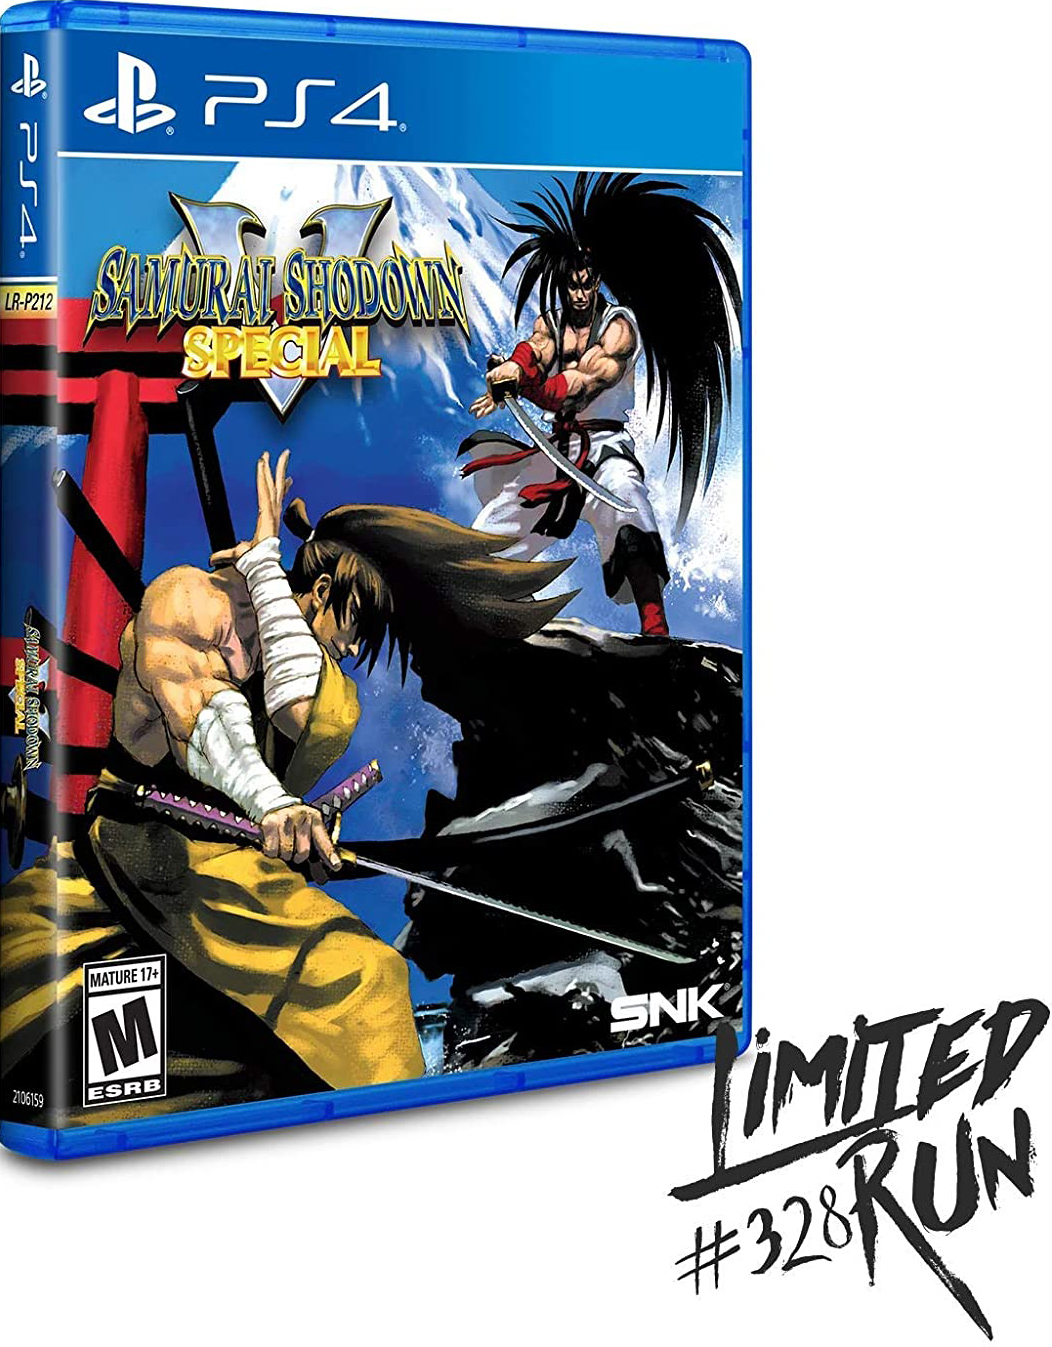 Limited Run Samurai Shodown V Special PlayStation 4